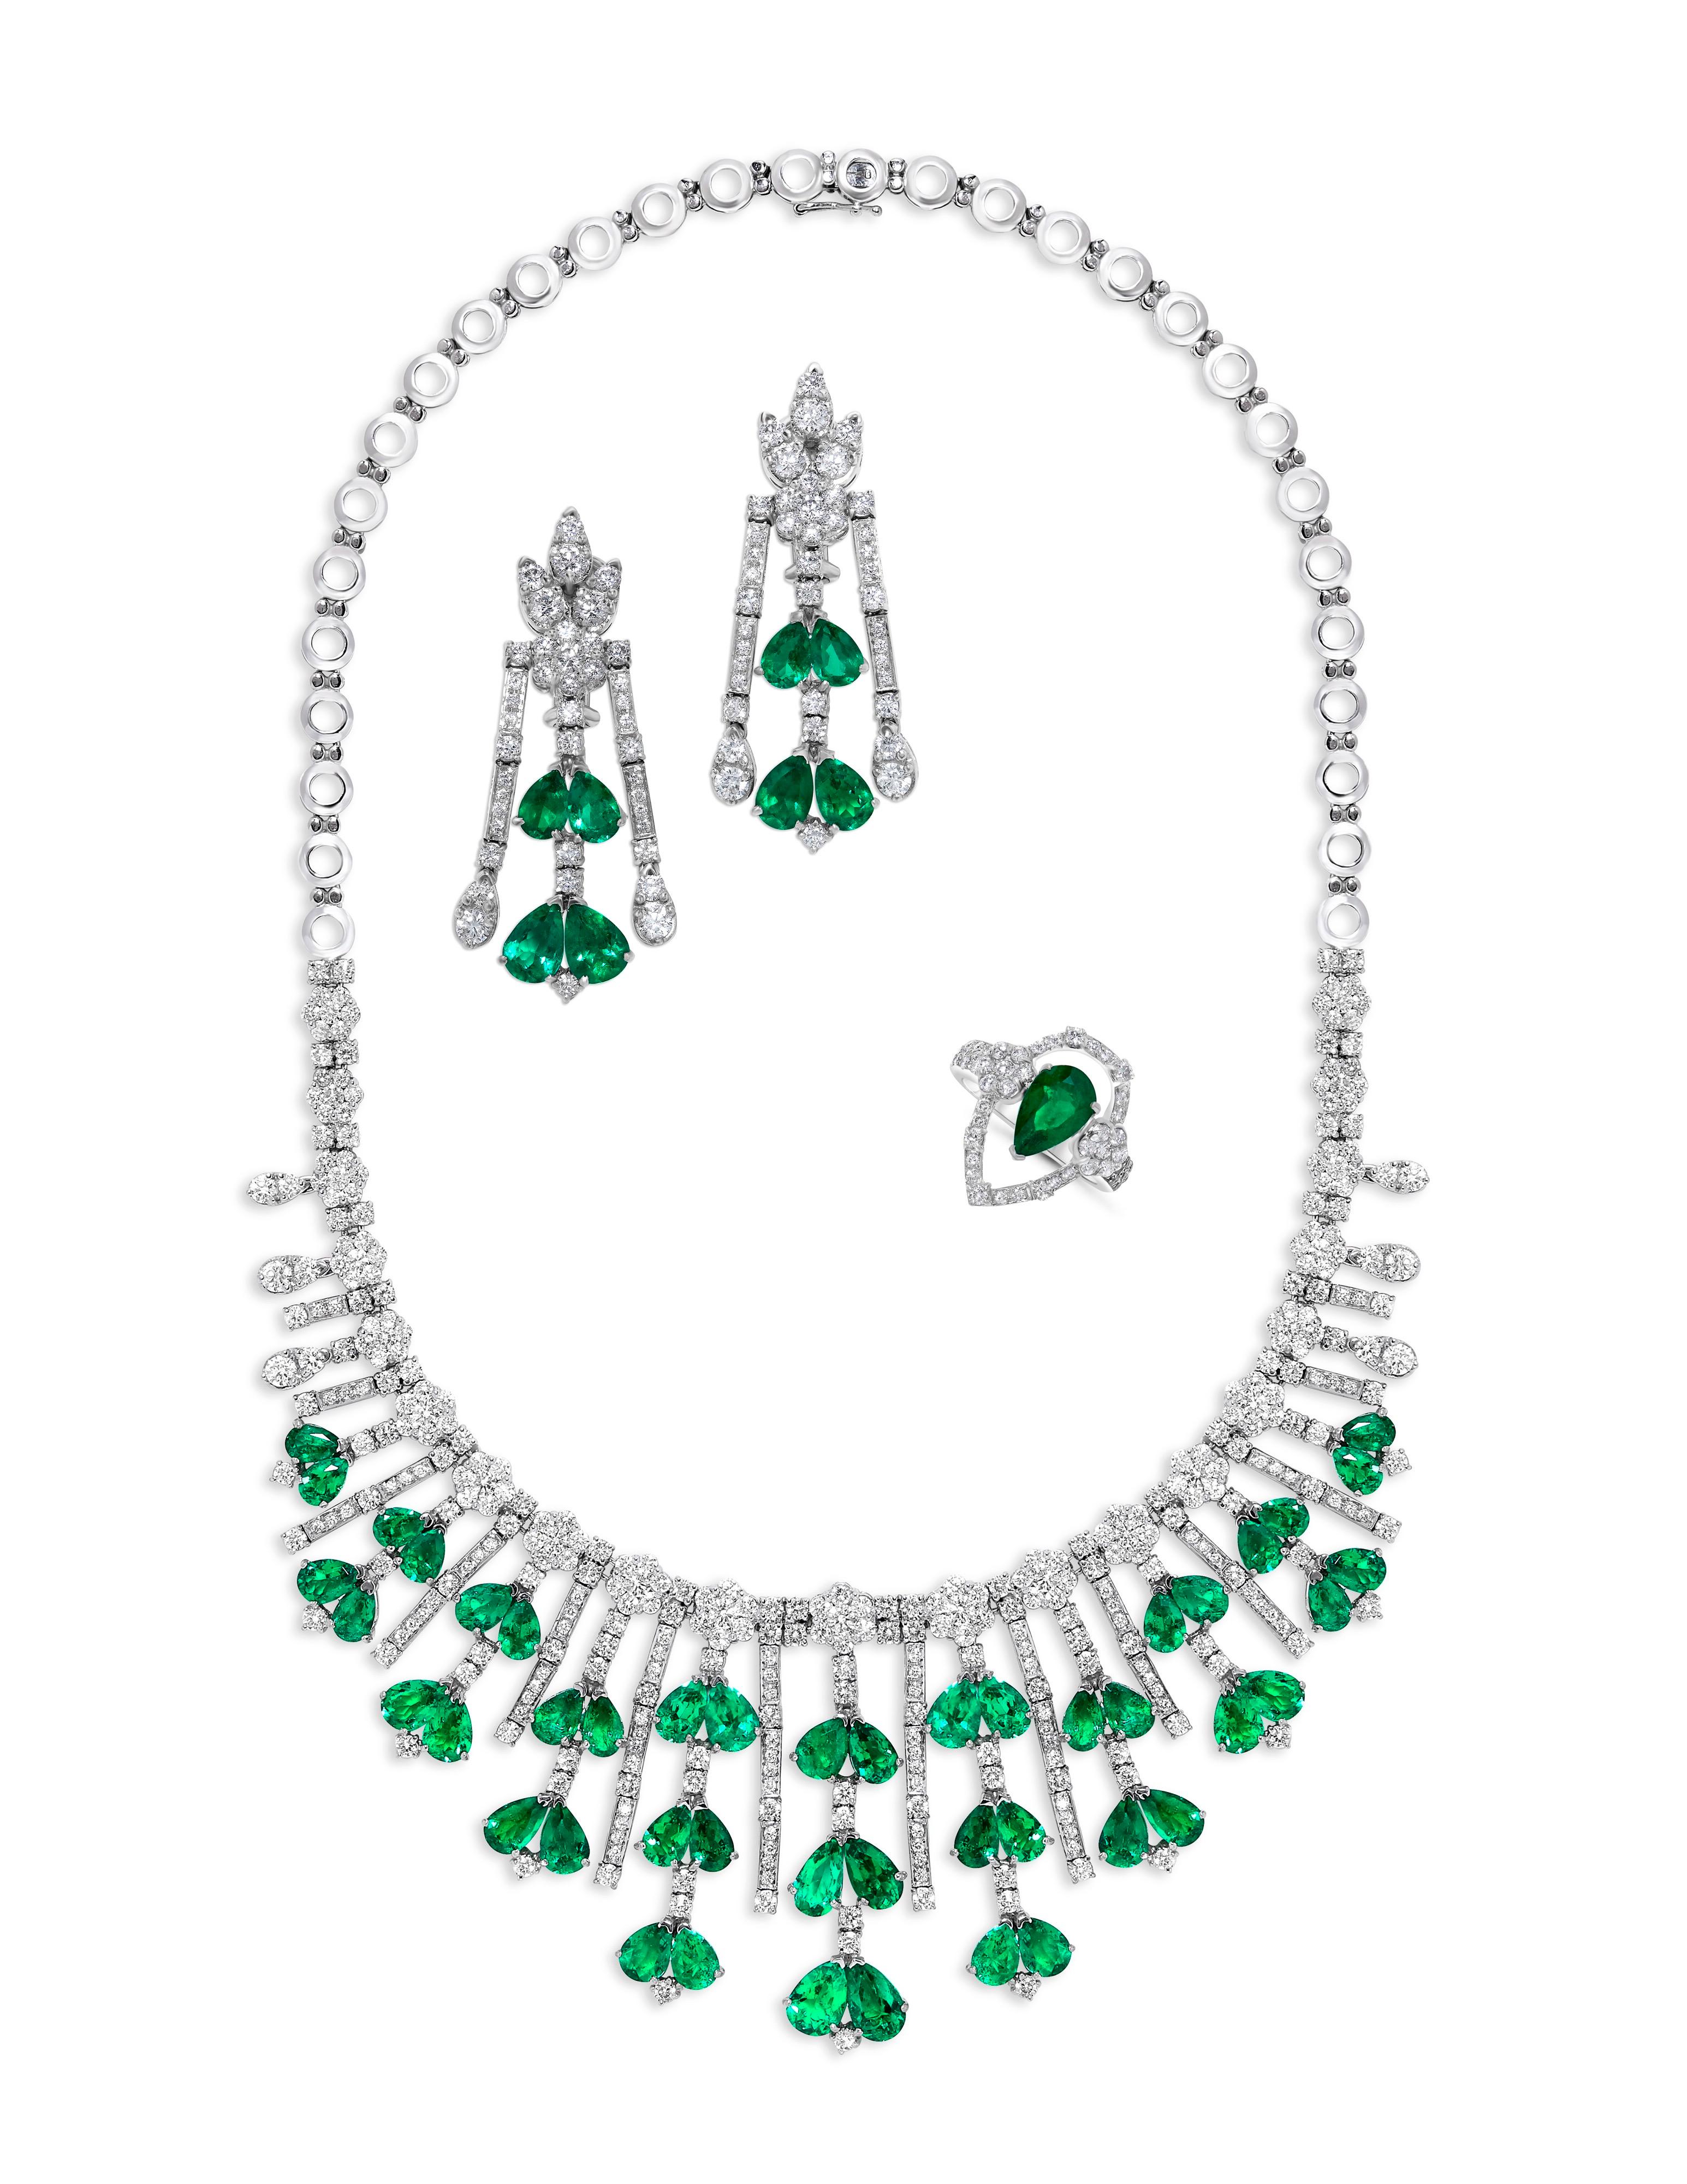 Emerald Cut Emilio Jewelry 52.00 Carat Colombian Muzo Vivid Green Emerald Suite For Sale